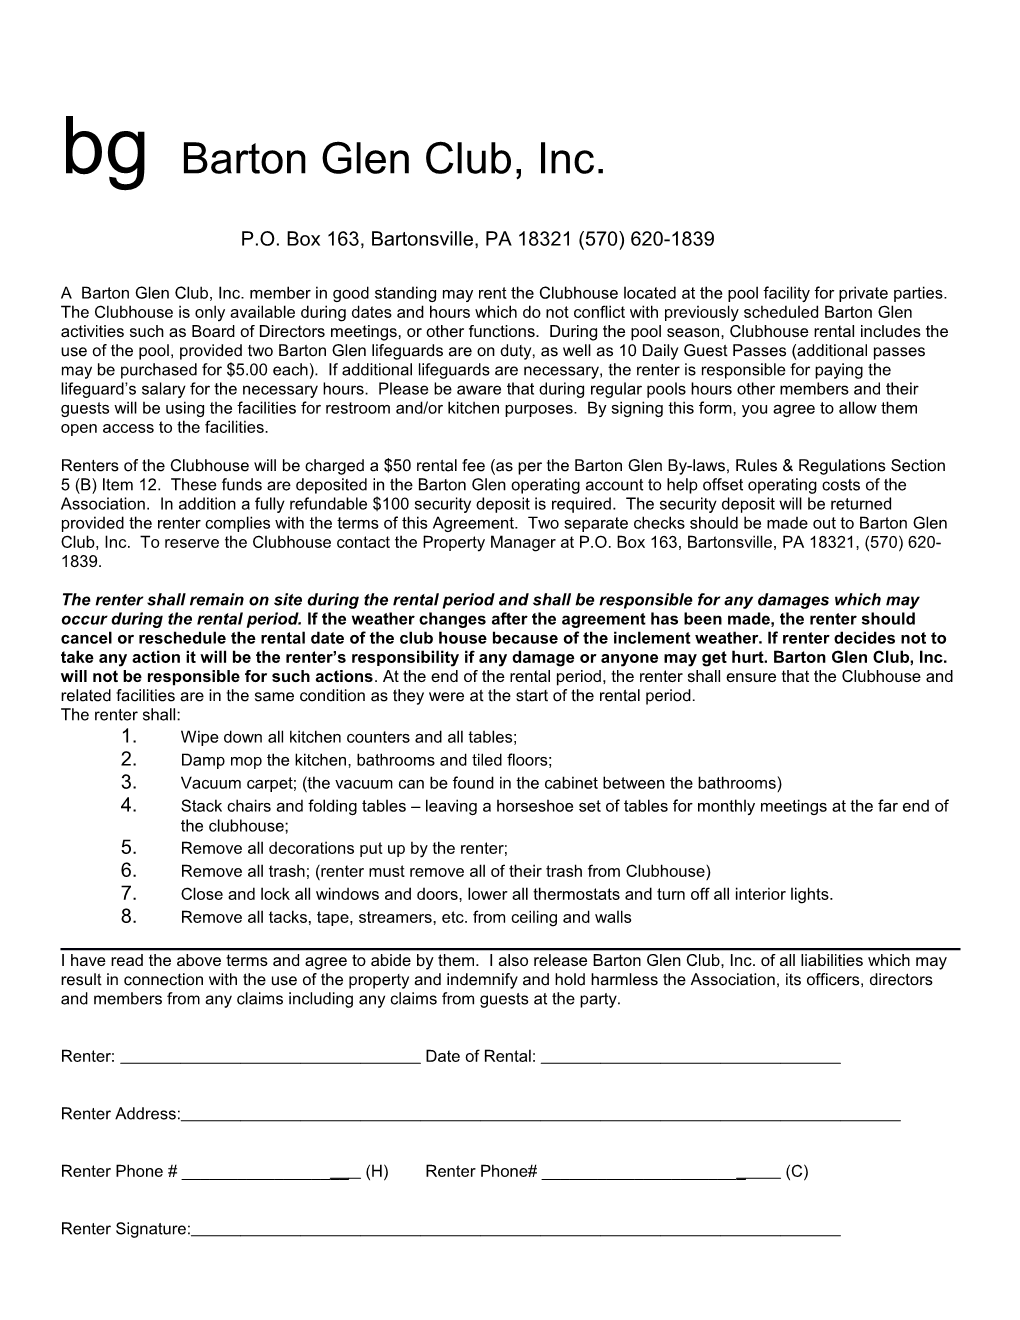 Bg Barton Glen Club, Inc